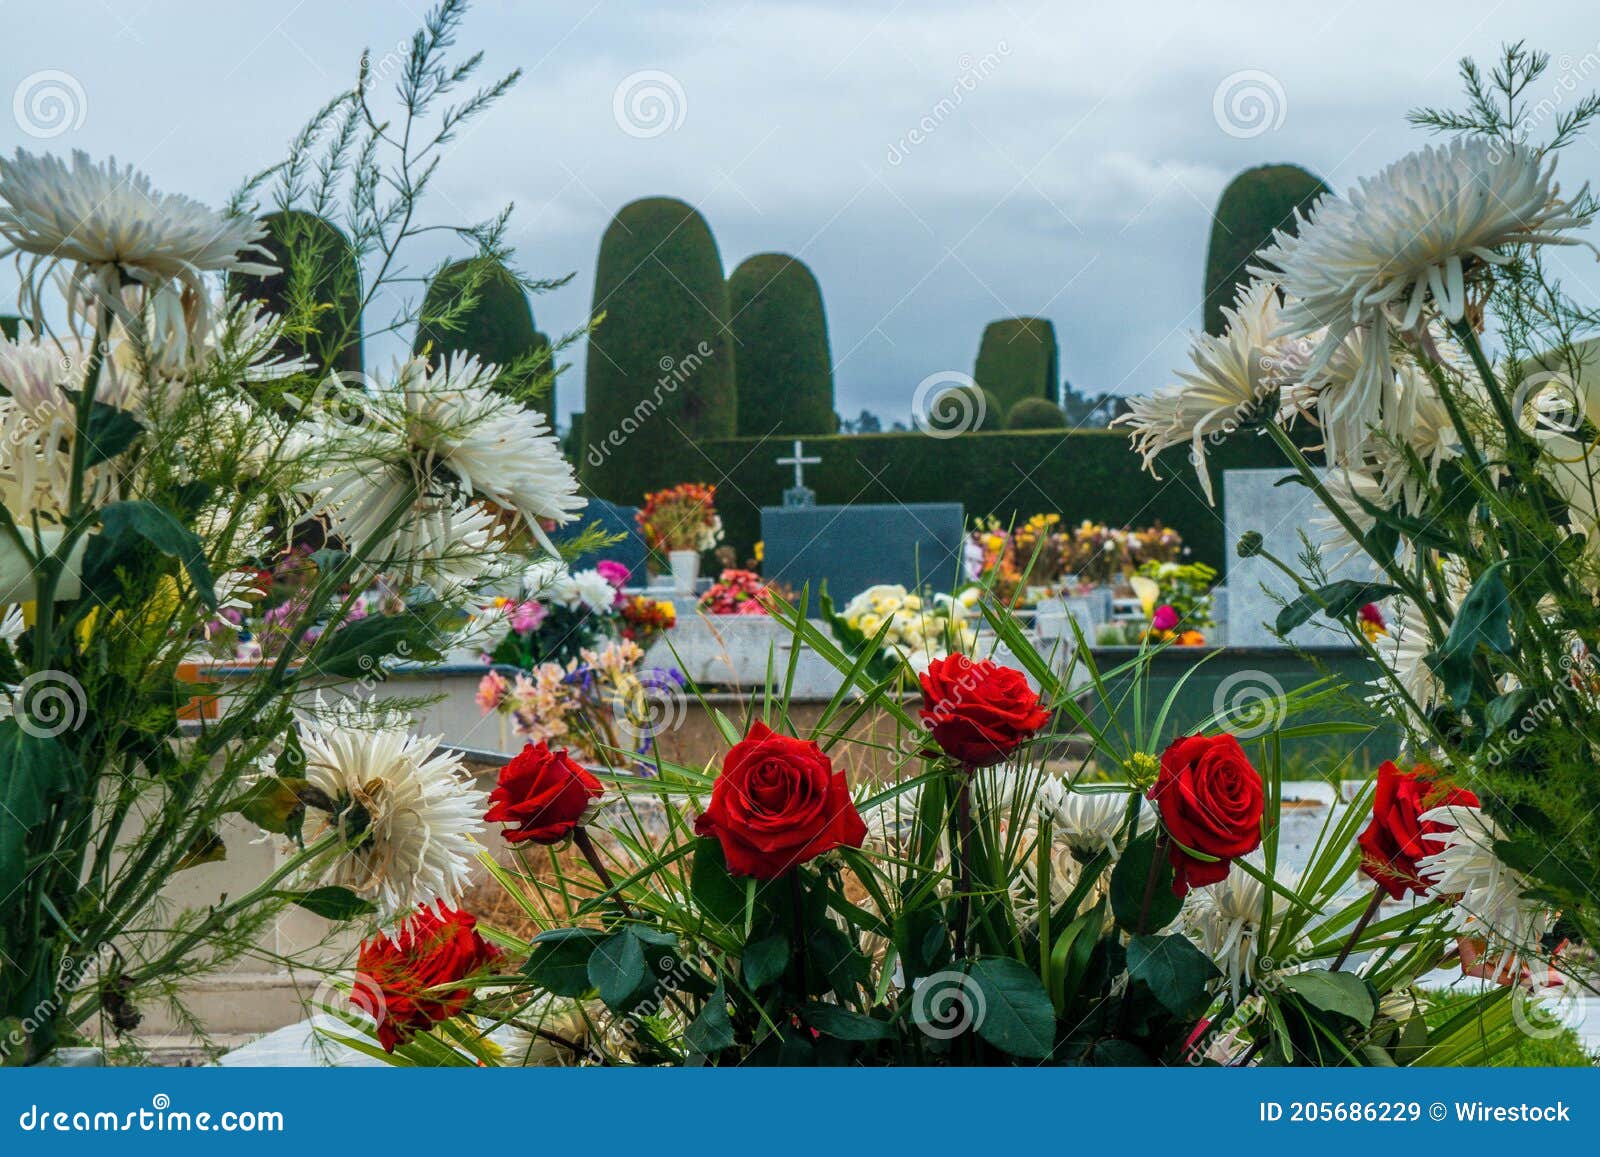 tulcÃÂ¡n, ecuador - dec 26, 2018: flores en el cementerio